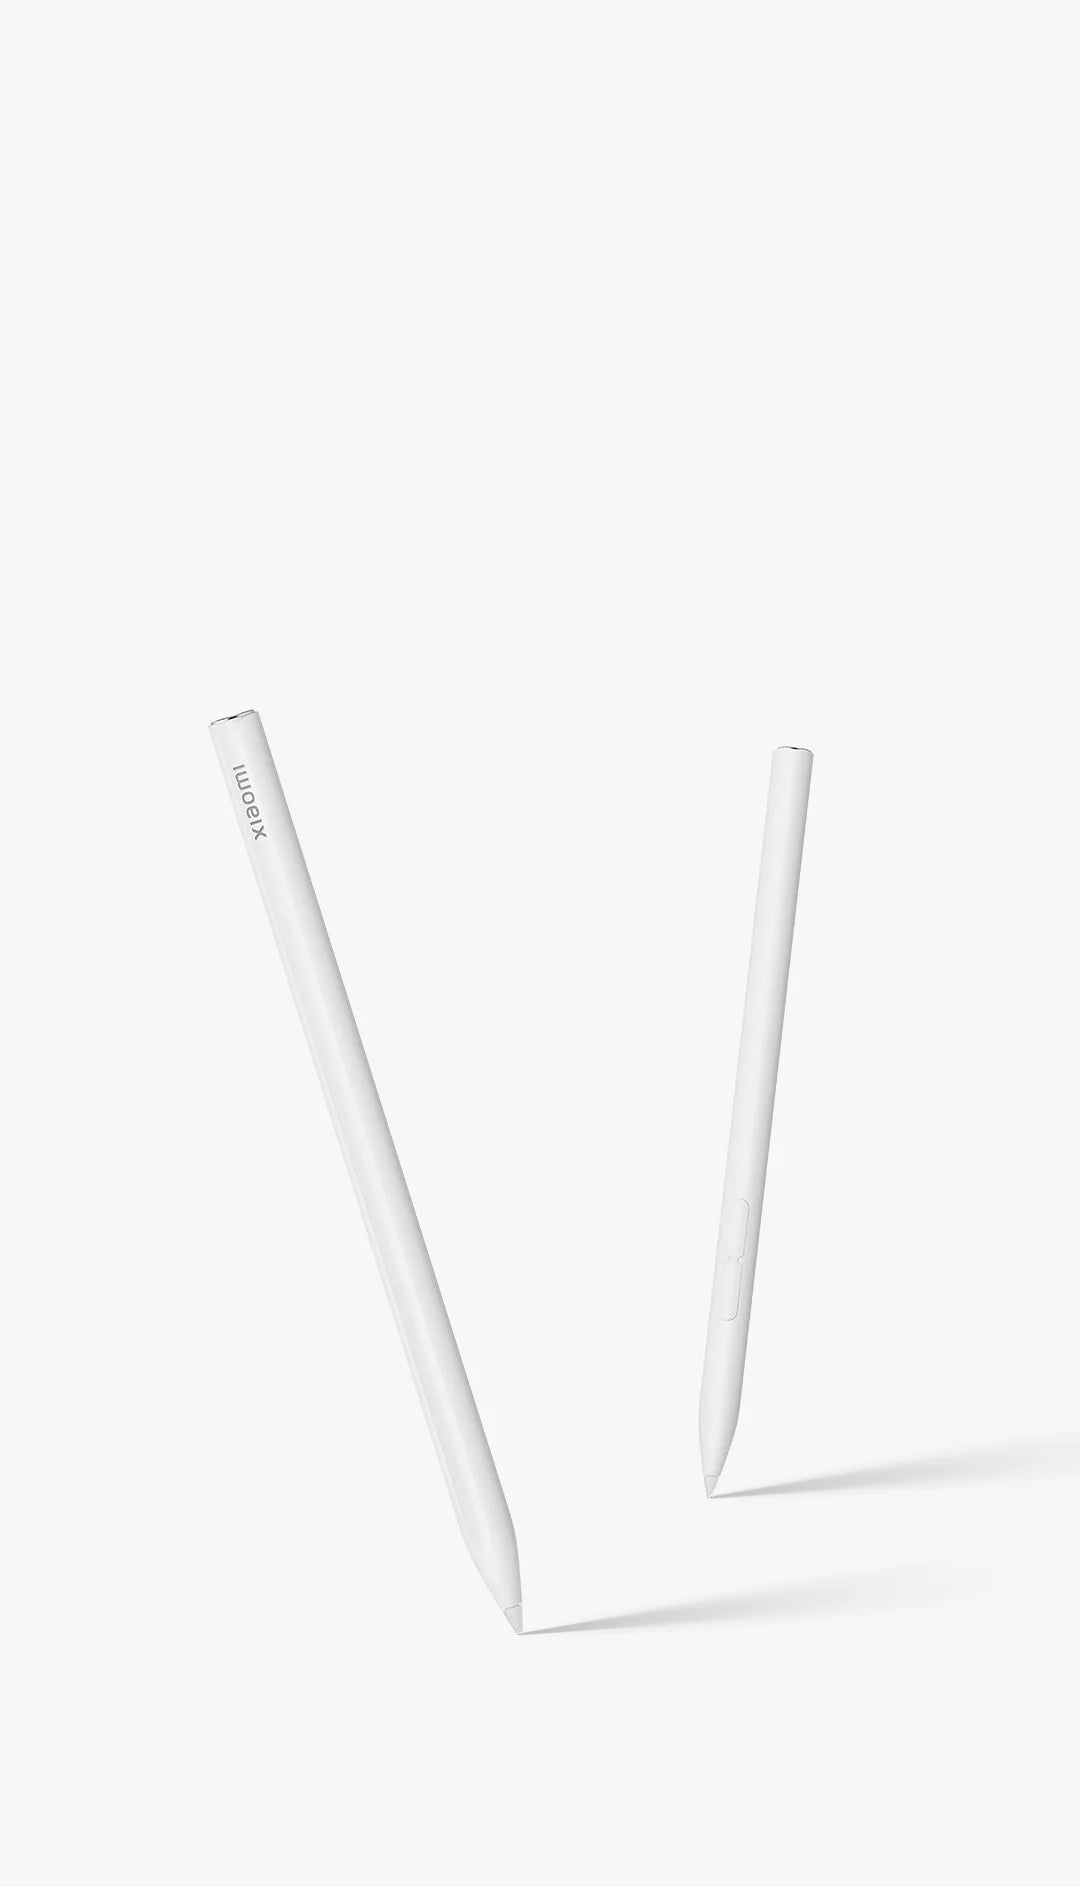 Xiaomi mi inspiration stylus pencil 2nd gen